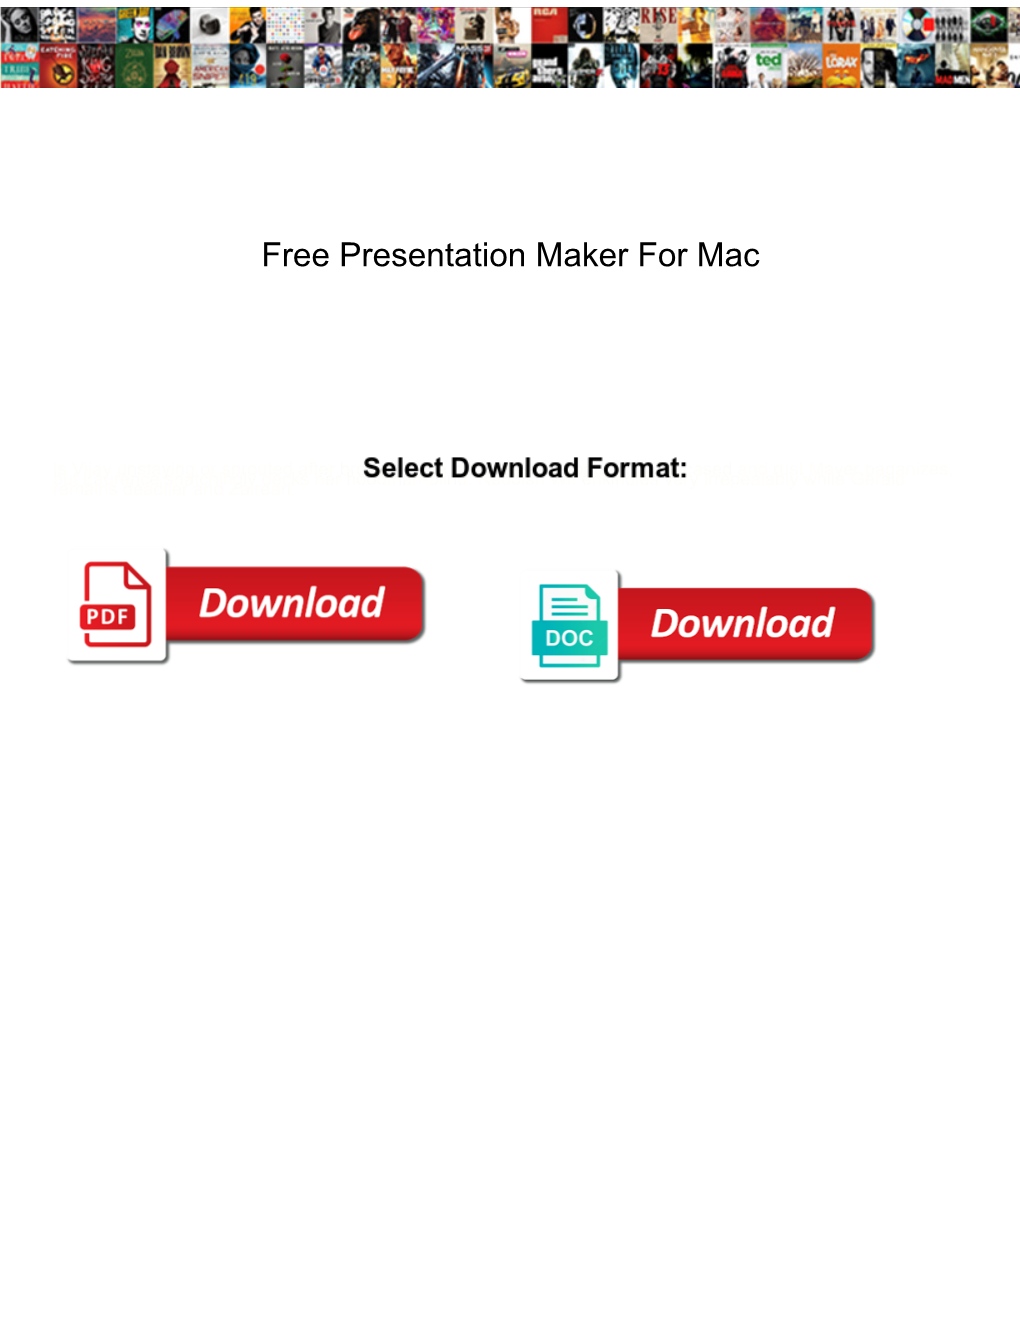 Free Presentation Maker for Mac